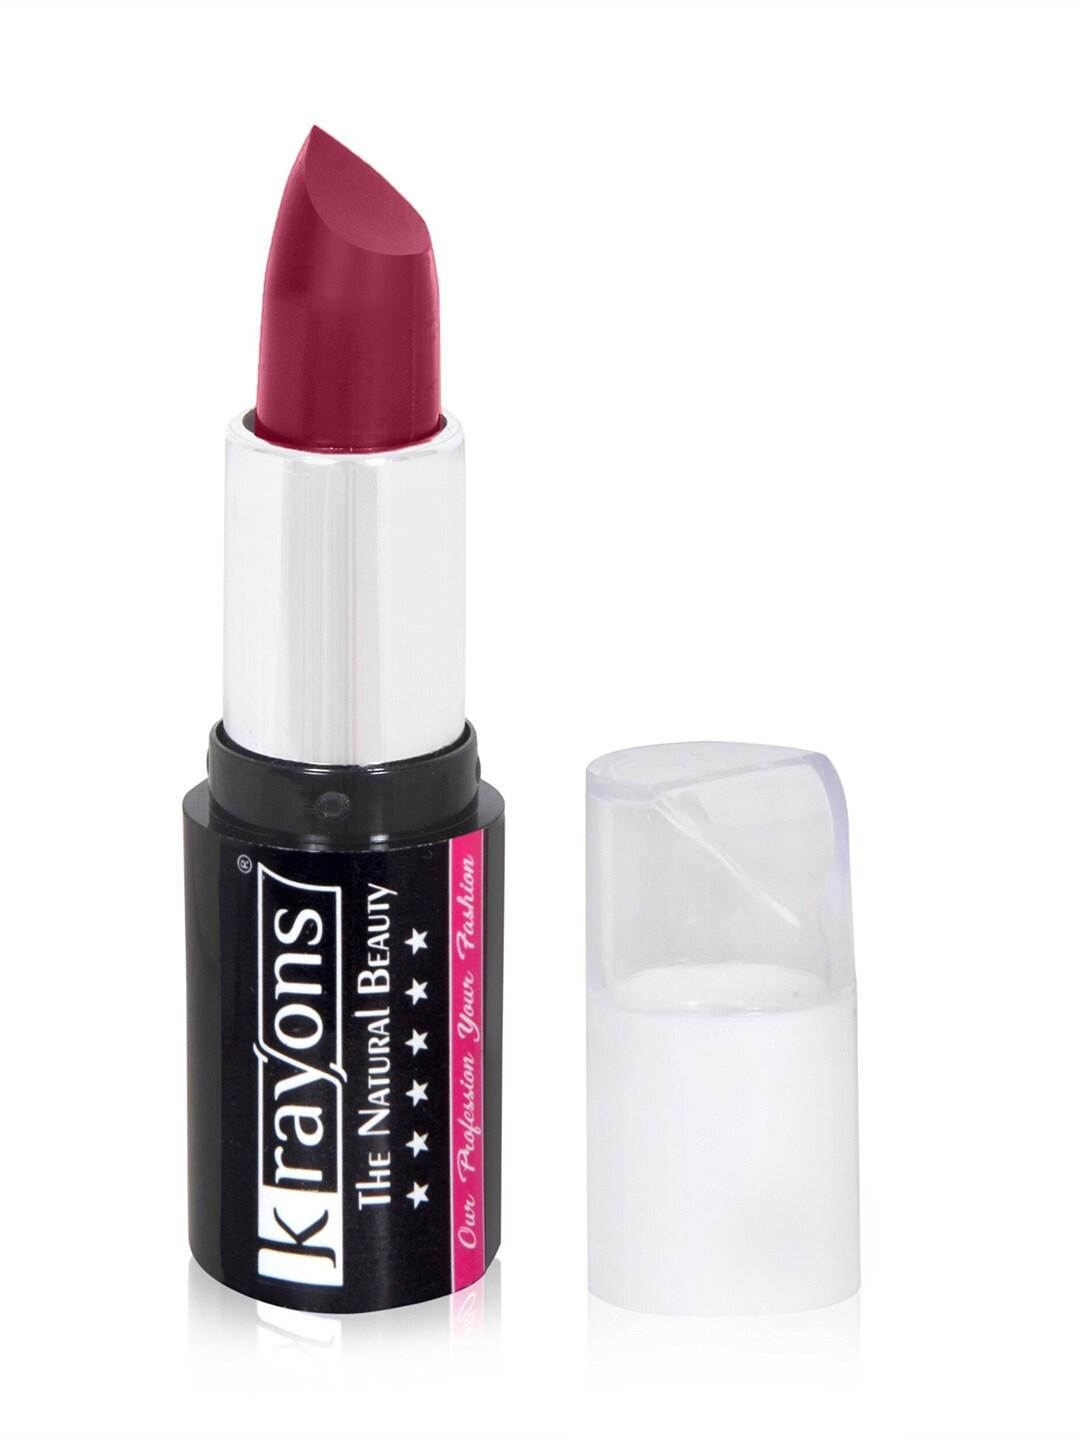 krayons Set of 2 The Natural Beauty Matte Lipsticks 4g Each - Plum Pink & Indian Red